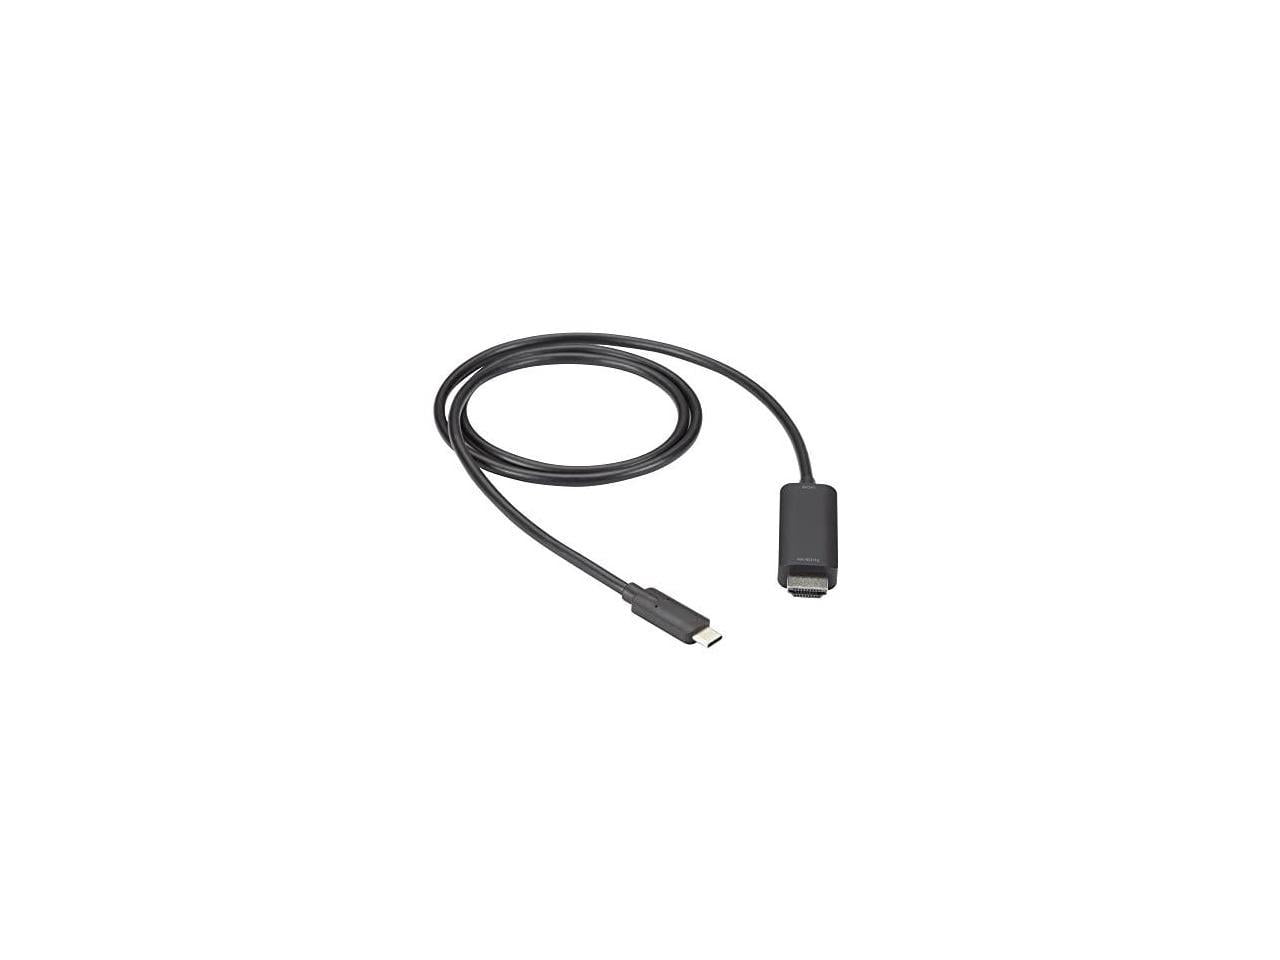 VA-USBC31-HDR4K-003, USB-C Adapter Cable - USB-C to HDMI 2.0 Active  Adapter, 4K60, HDR, HDCP 2.2, DP 1.2 Alt Mode - Black Box